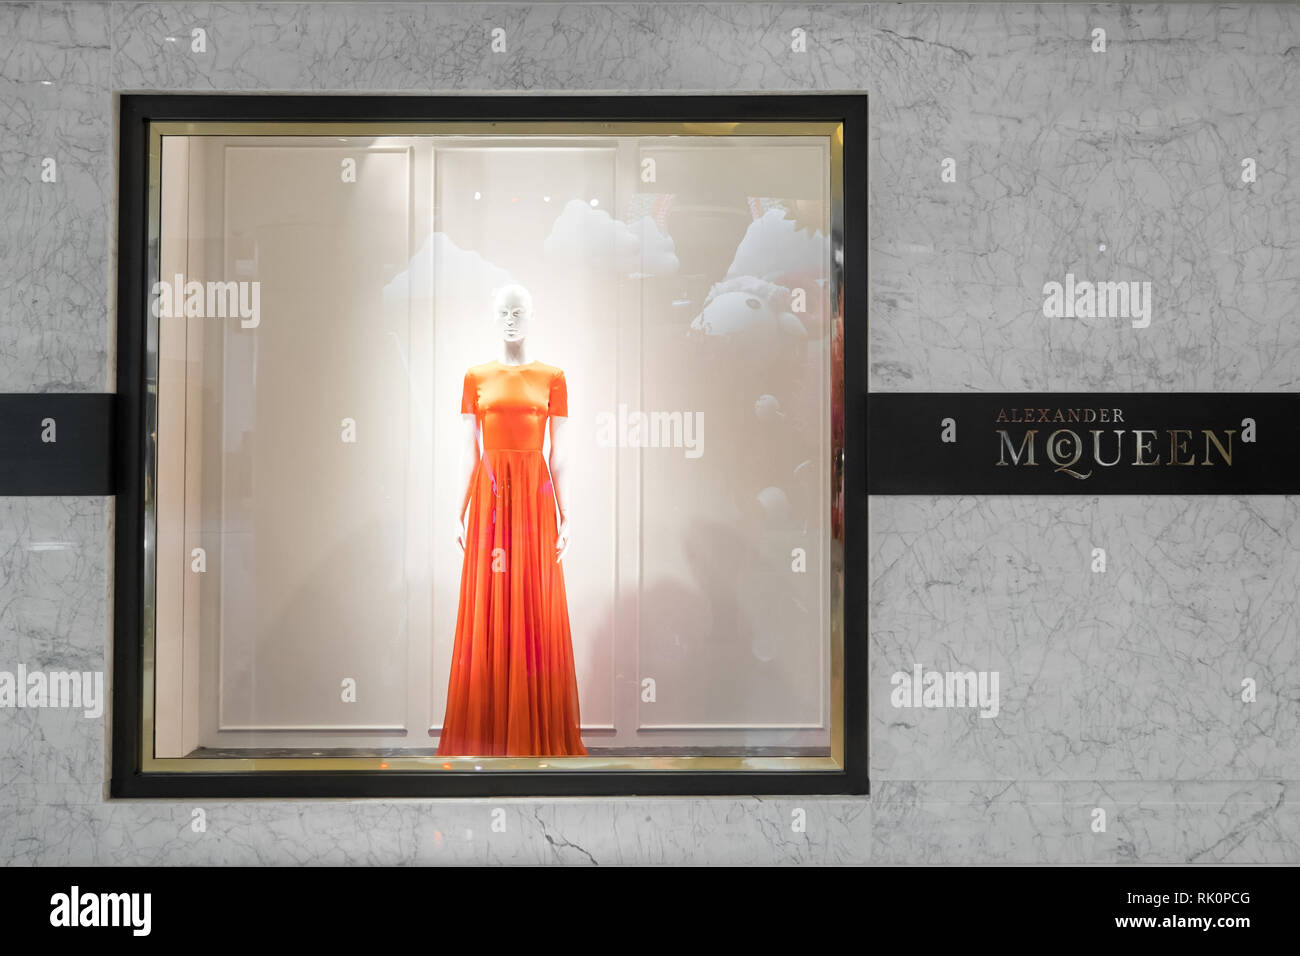 HONG KONG - 23 Jan, 2015: Alexander Mcqueen boutique de moda mostrar ventana con maniqui vestidos de alta costura vestidos hembra rojo de lujo Foto de stock